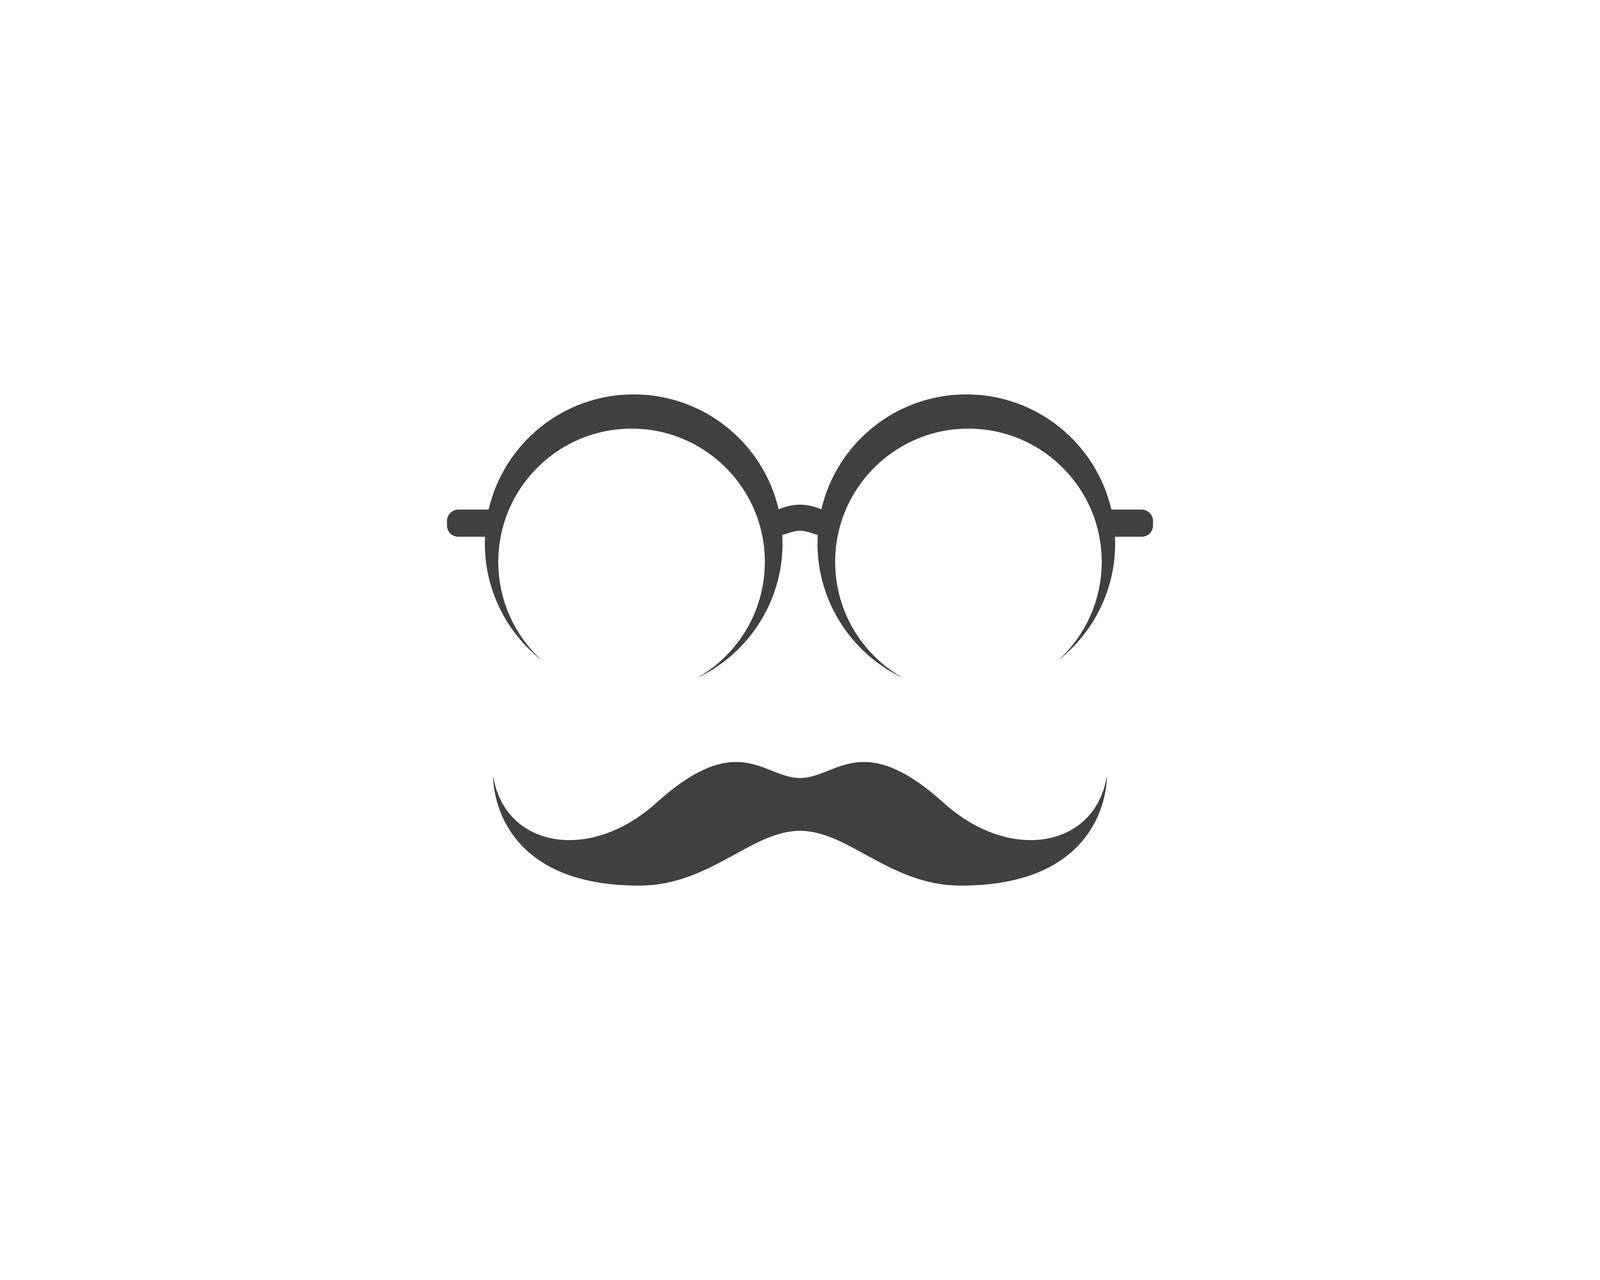 Mustache icon vector illustration